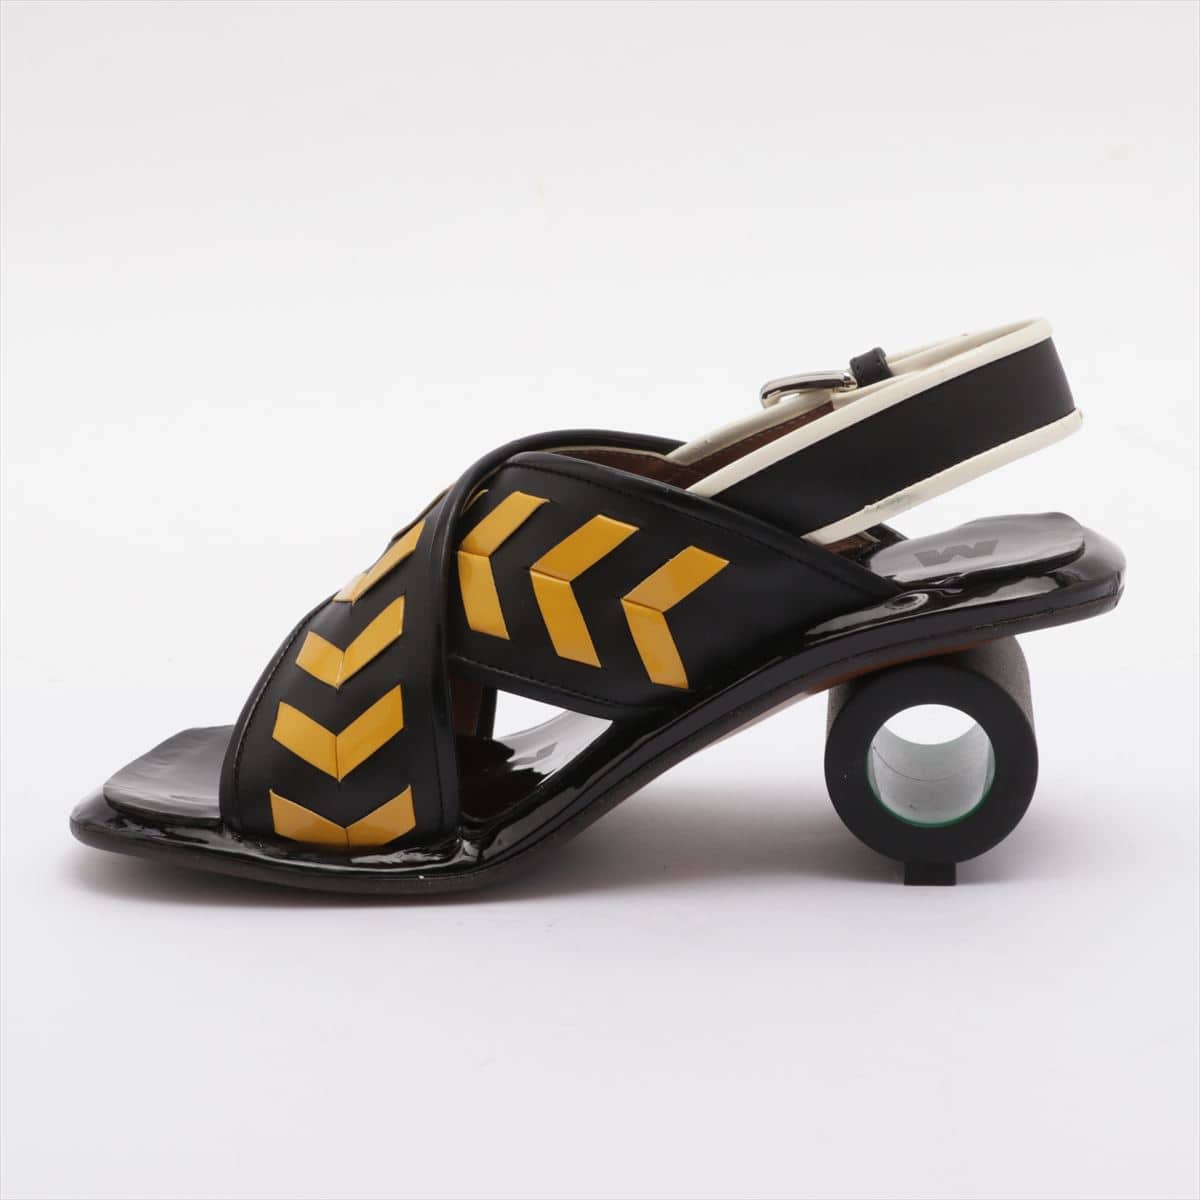 Marni Rubber Sandals 36 Ladies' Black